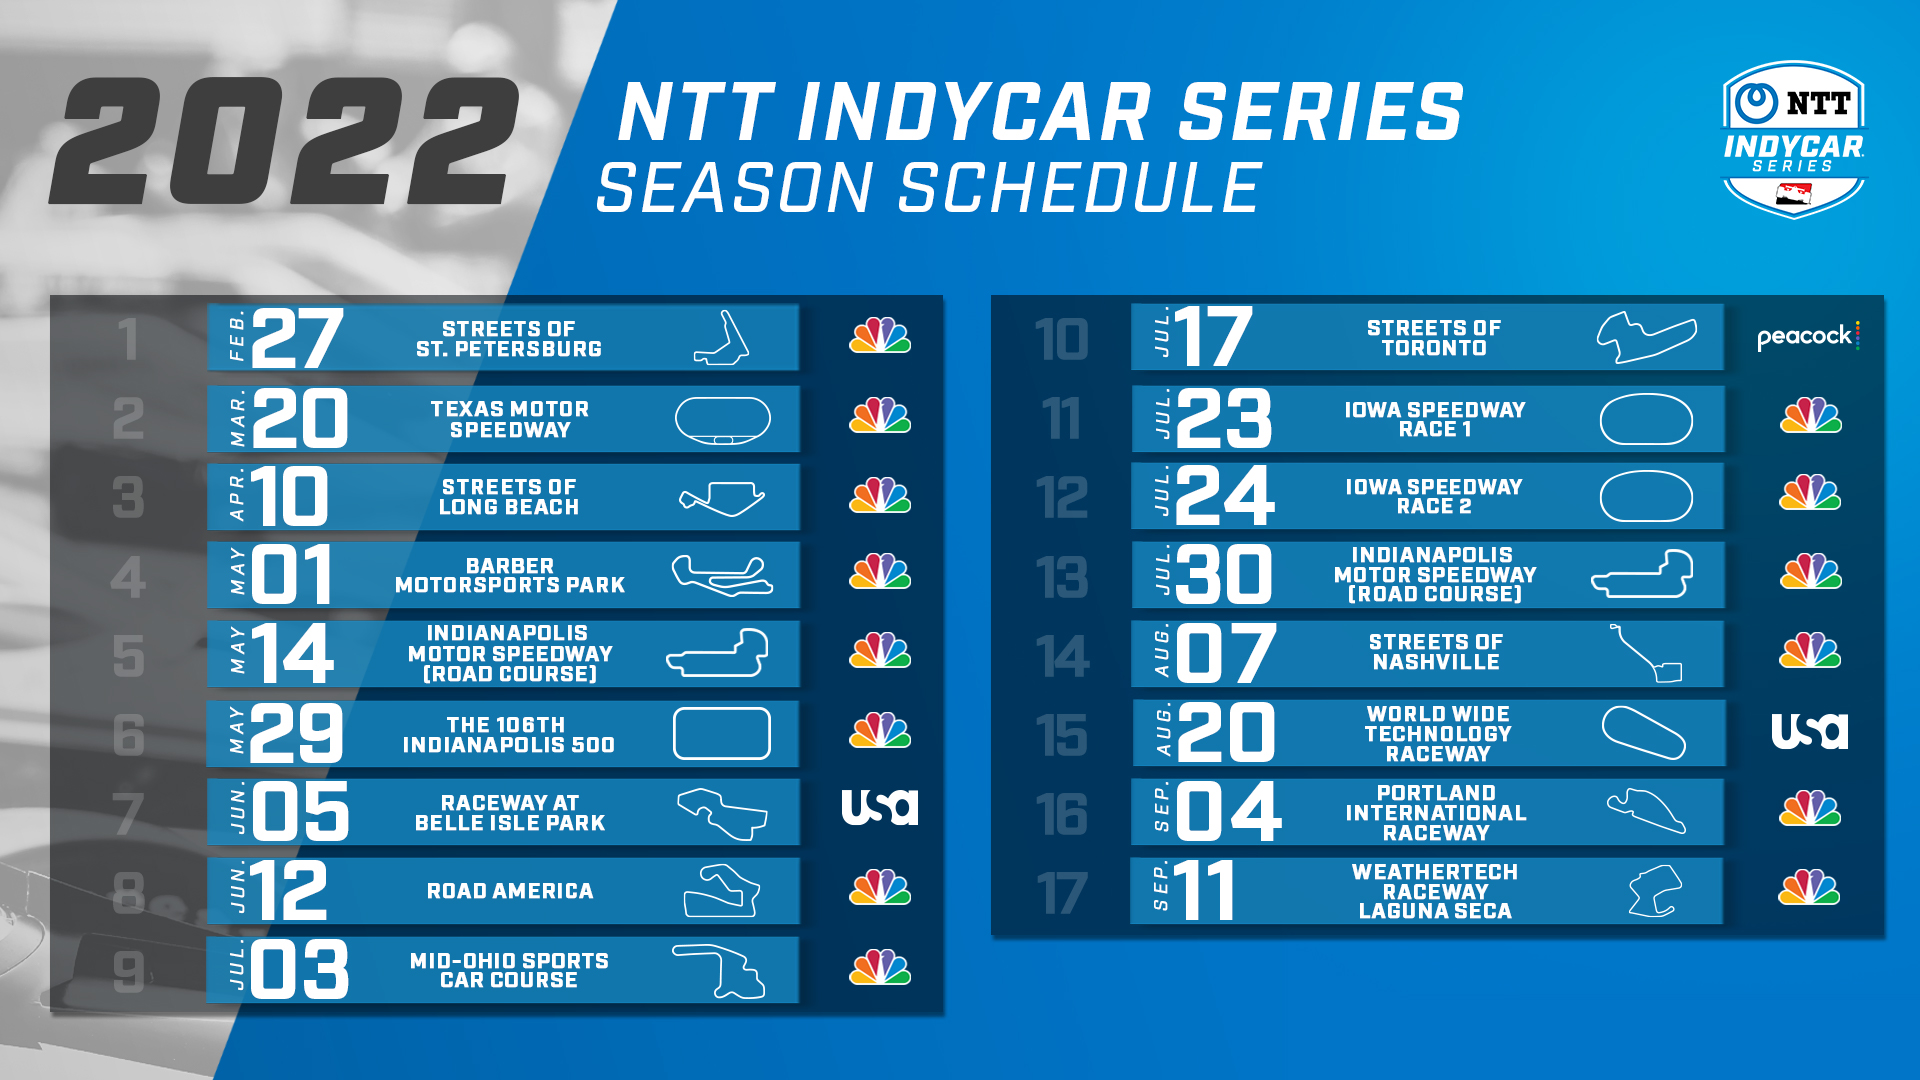 Indy Race Schedule 2022 2022 Formula 1 & Other Motorsport Calendars | Grand Prix 247